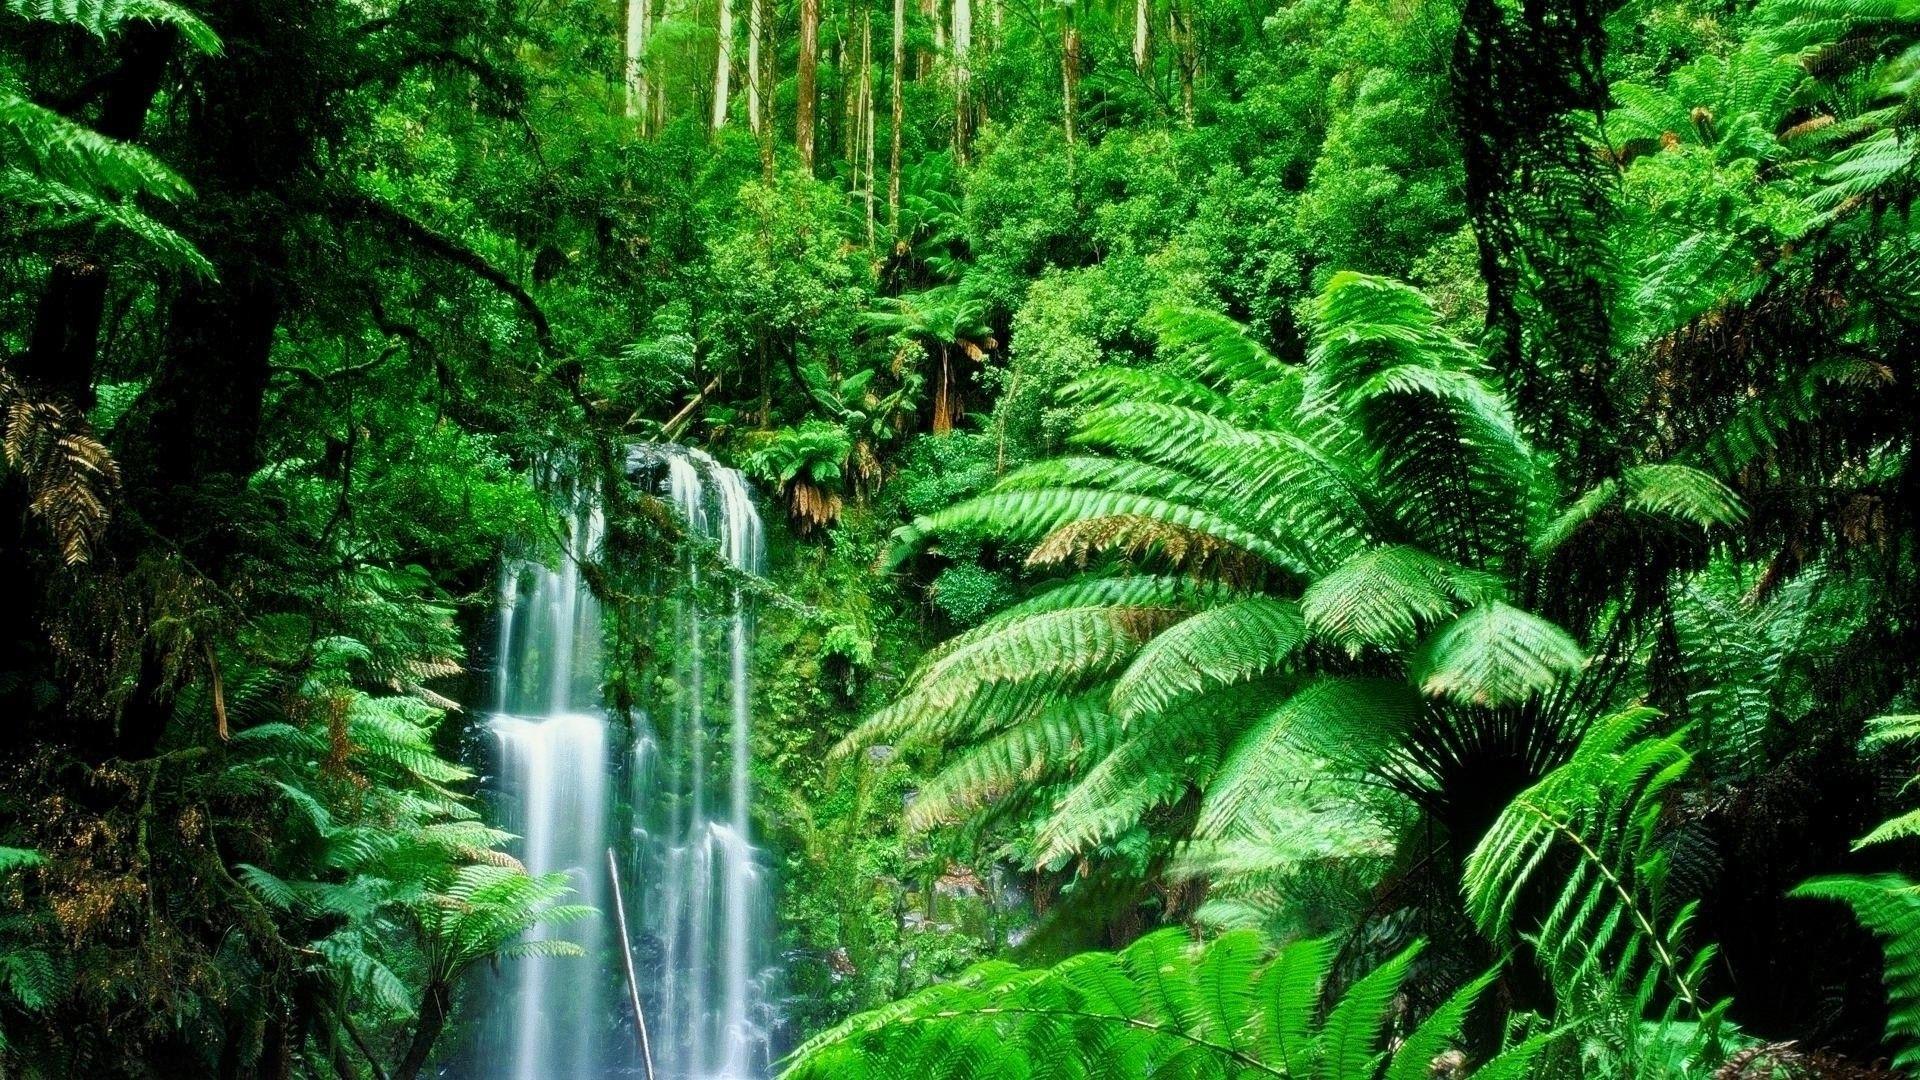 Amazon Rainforest, Feel the Rainfall of Leaves. Amazon. Rainforest